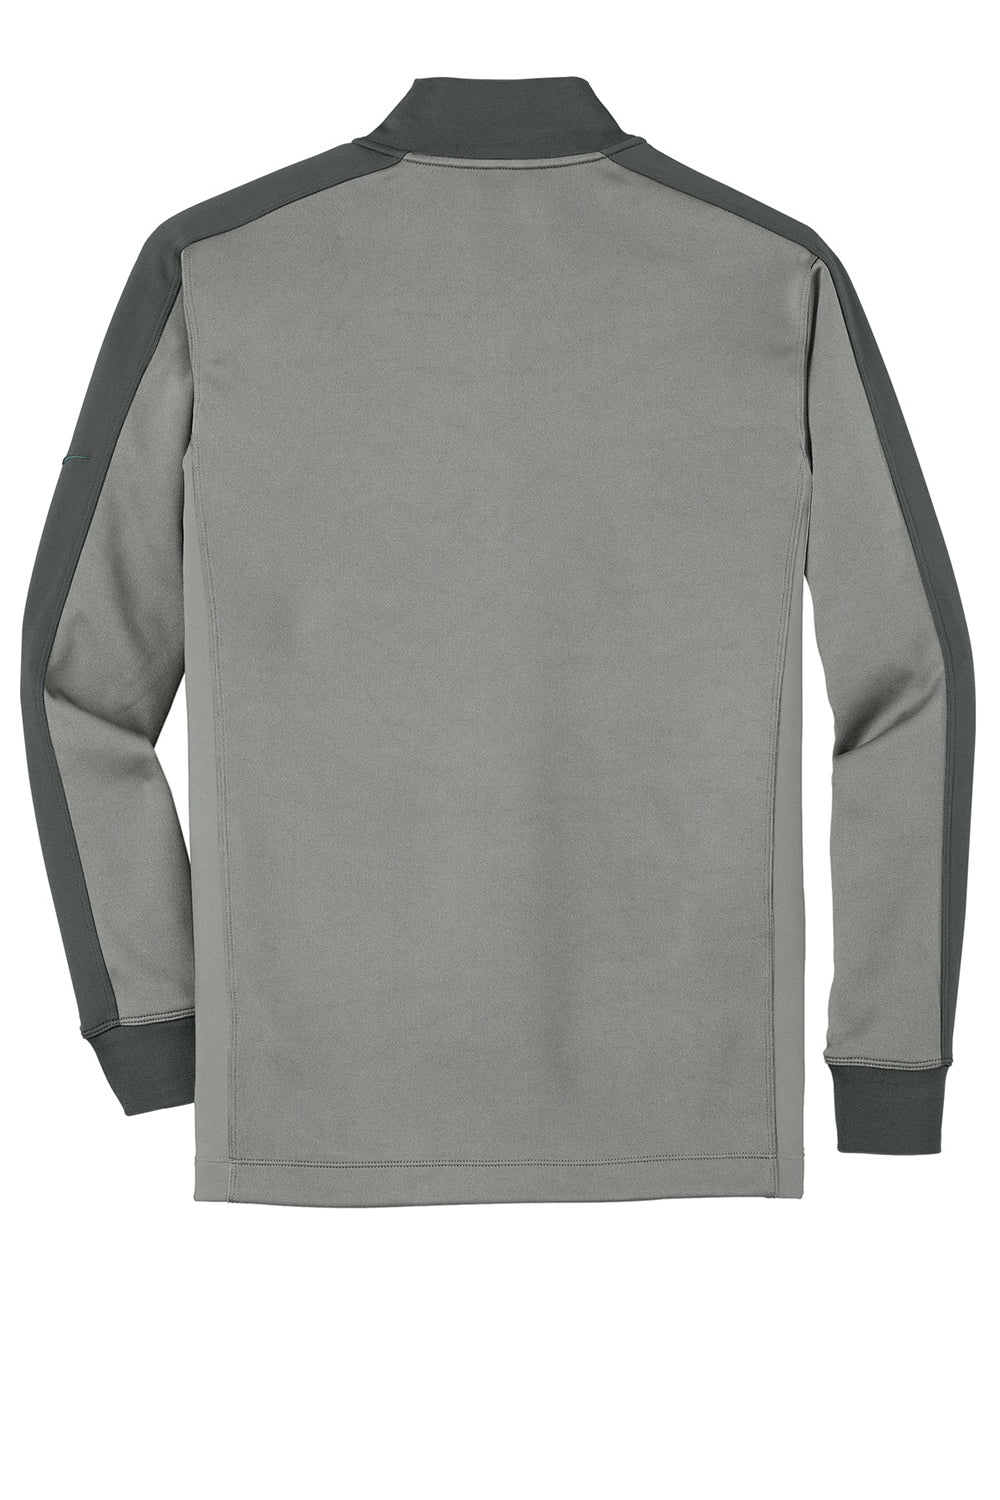 Nike 578673 Mens Dri-Fit Moisture Wicking 1/4 Zip Sweatshirt Heather Grey/Dark Grey Flat Back